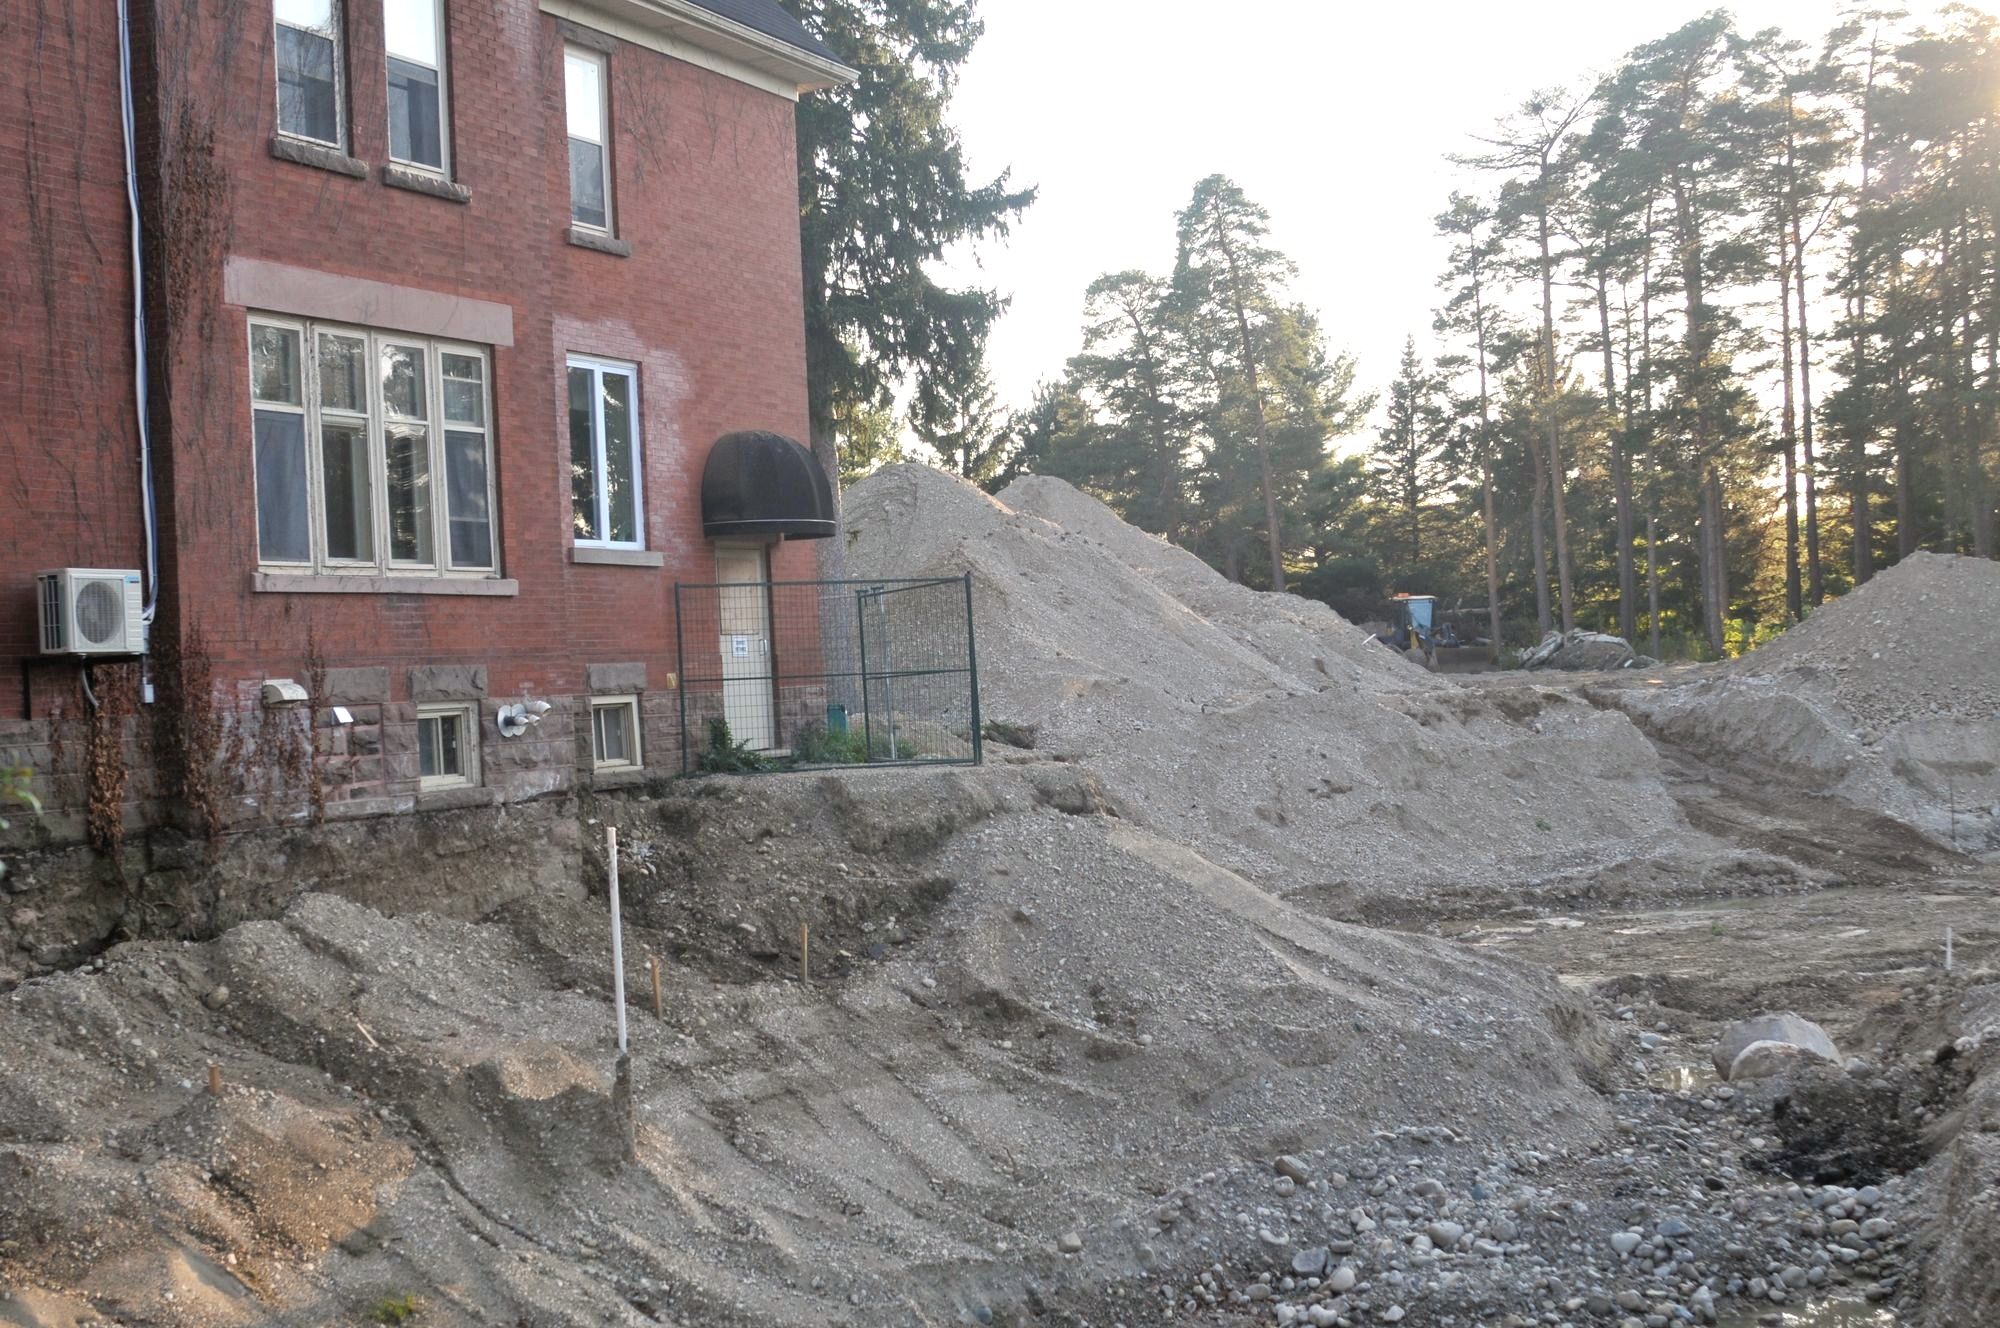 Still home to refugees, Jakobstettel site also scene of soil remediation